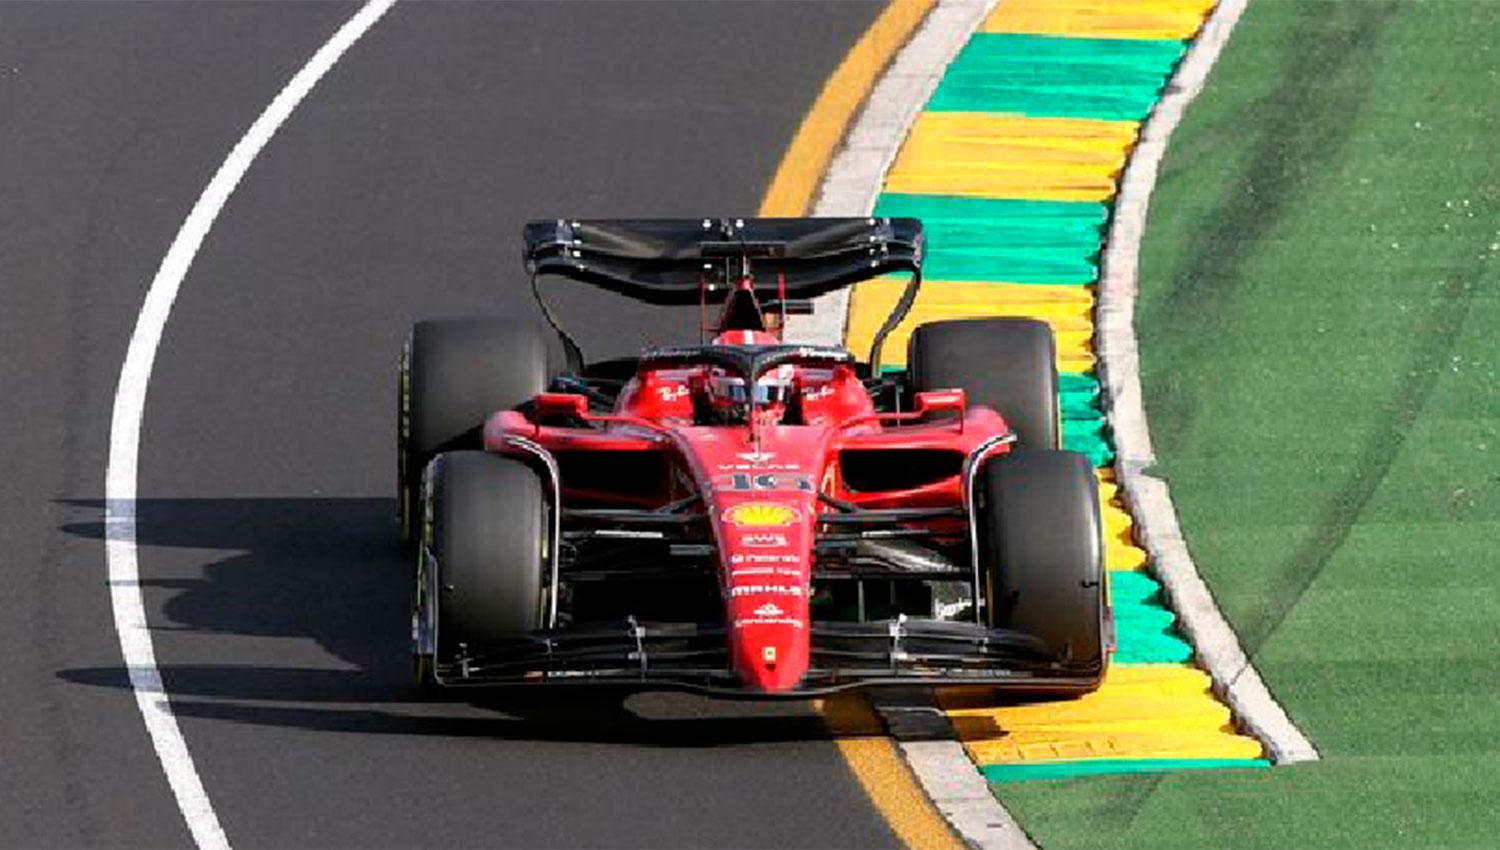 IMPARABLE. Leclerc repitió otro gran fin de semana a bordo de su Ferrari.